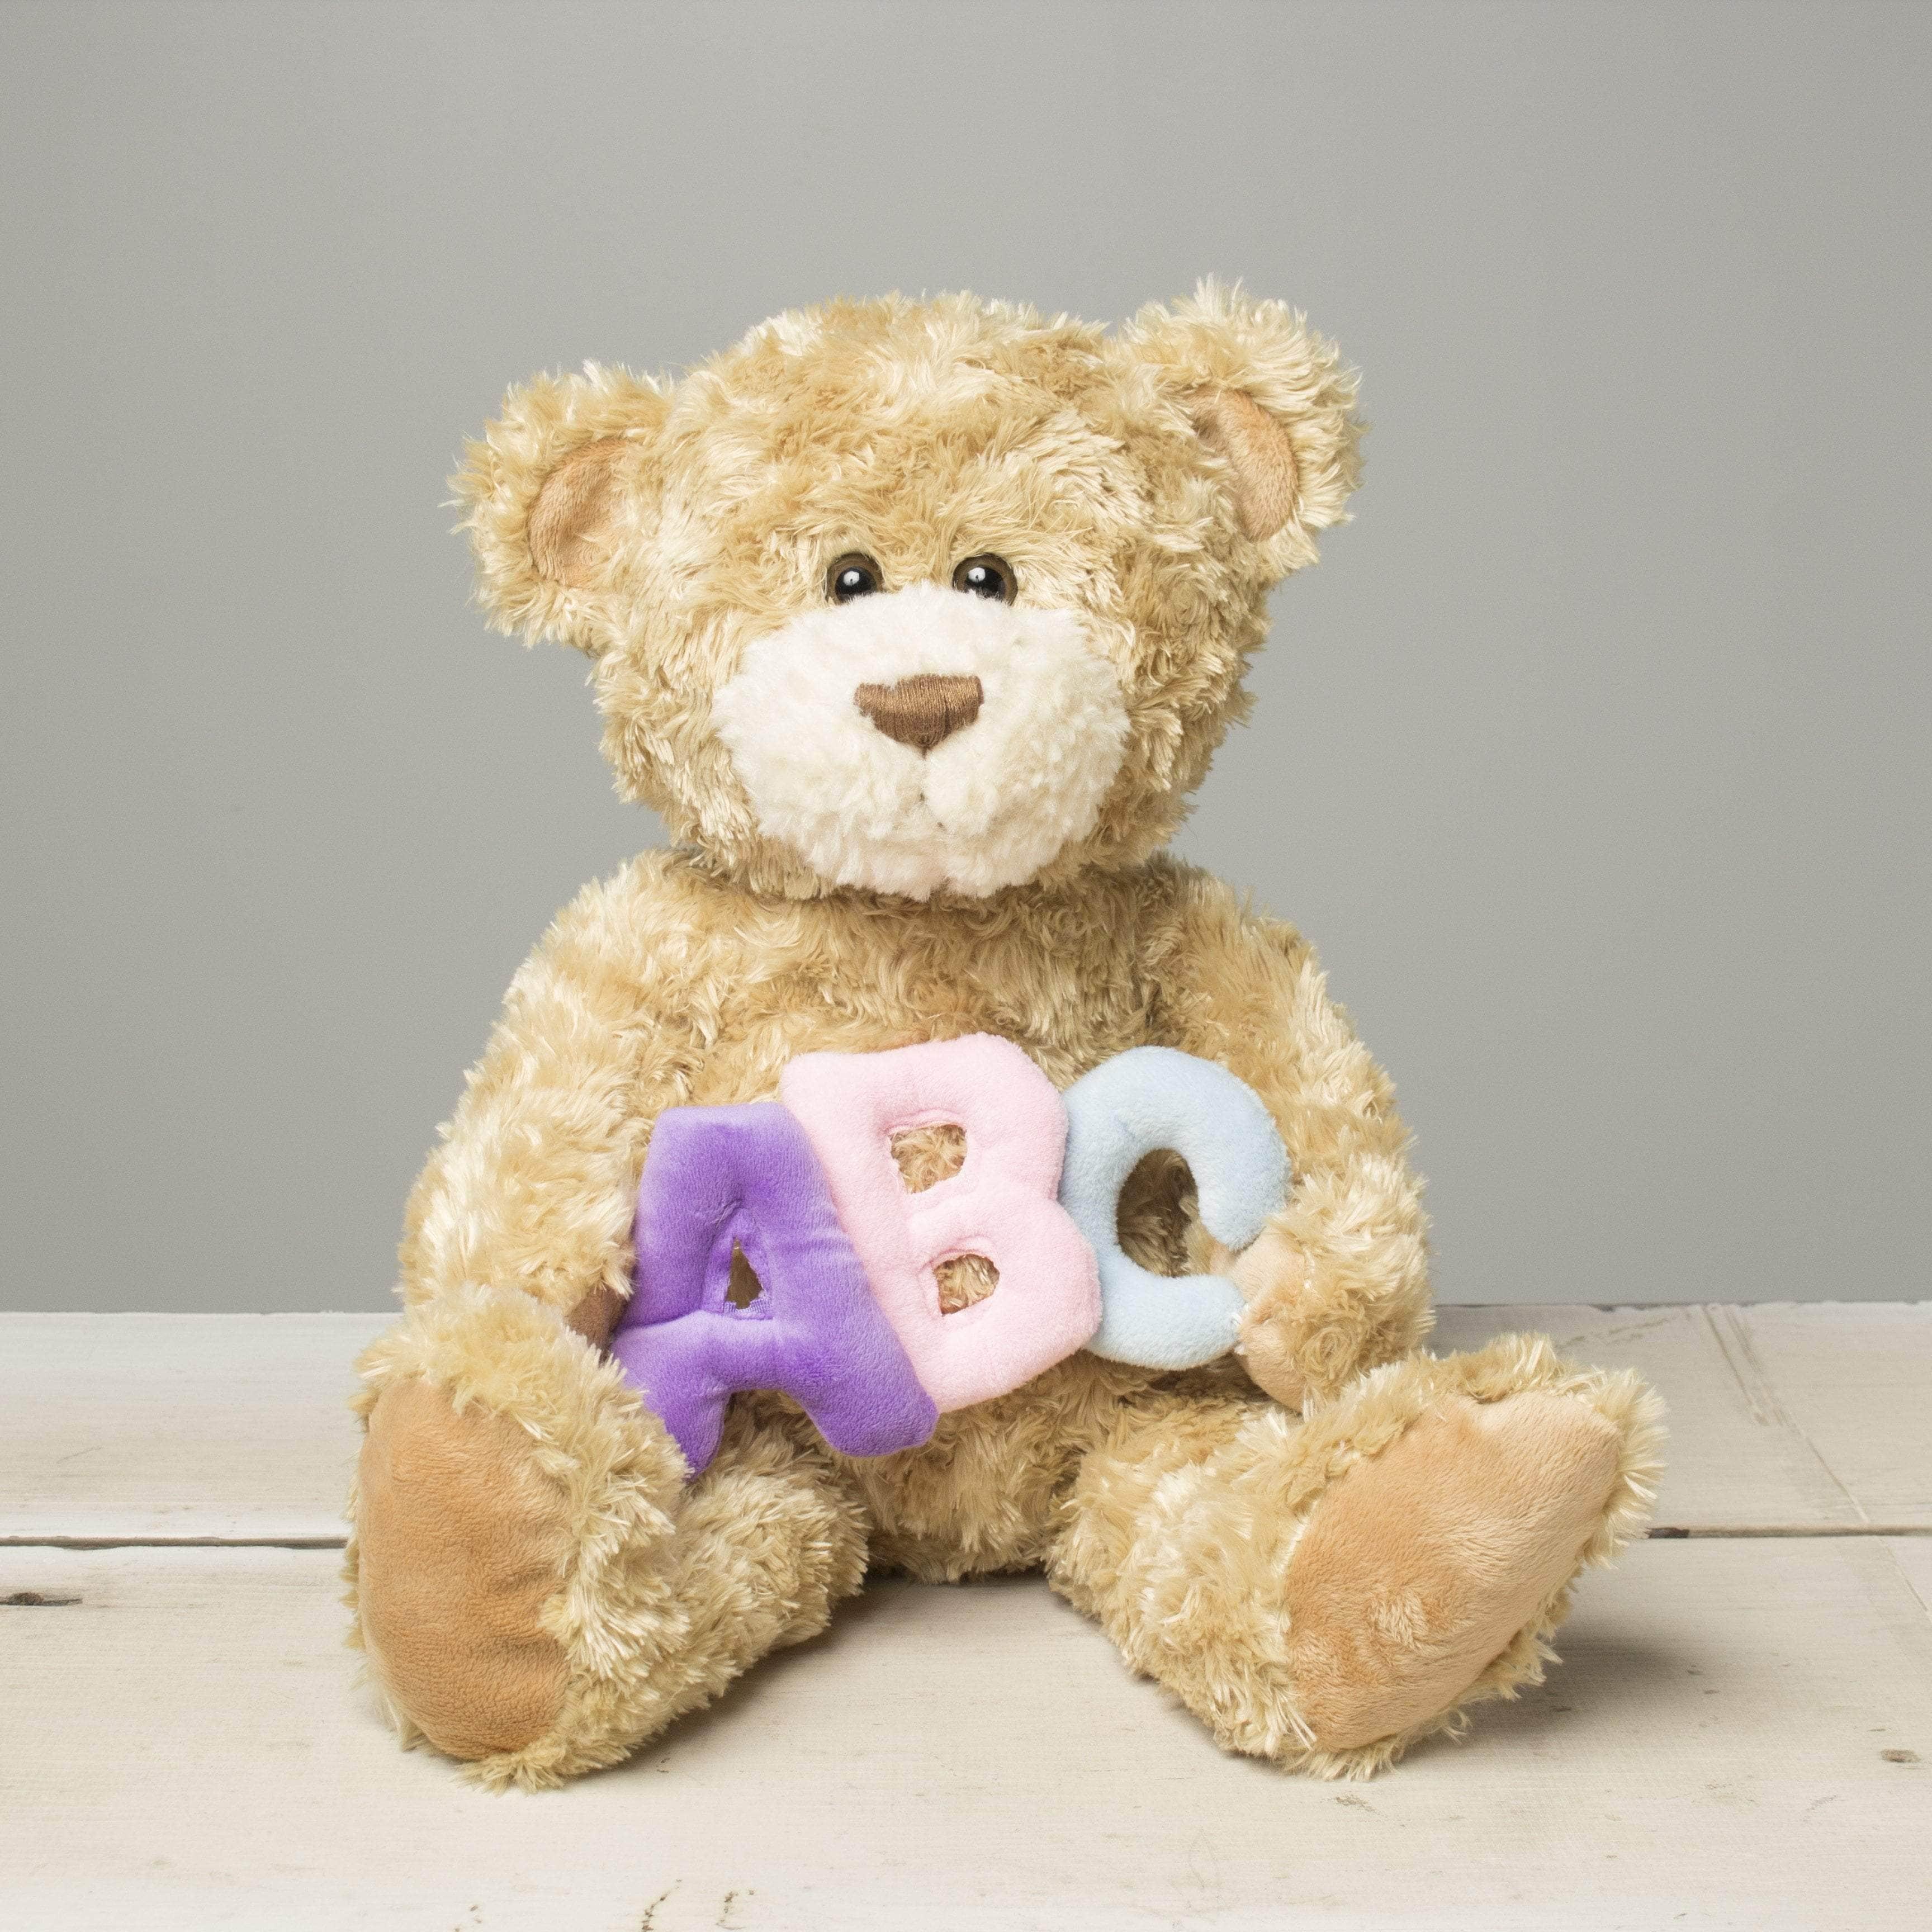 Gitzy Plush "Jackson" the 12in Pastel ABC Stuffed Teddy Bear Animal